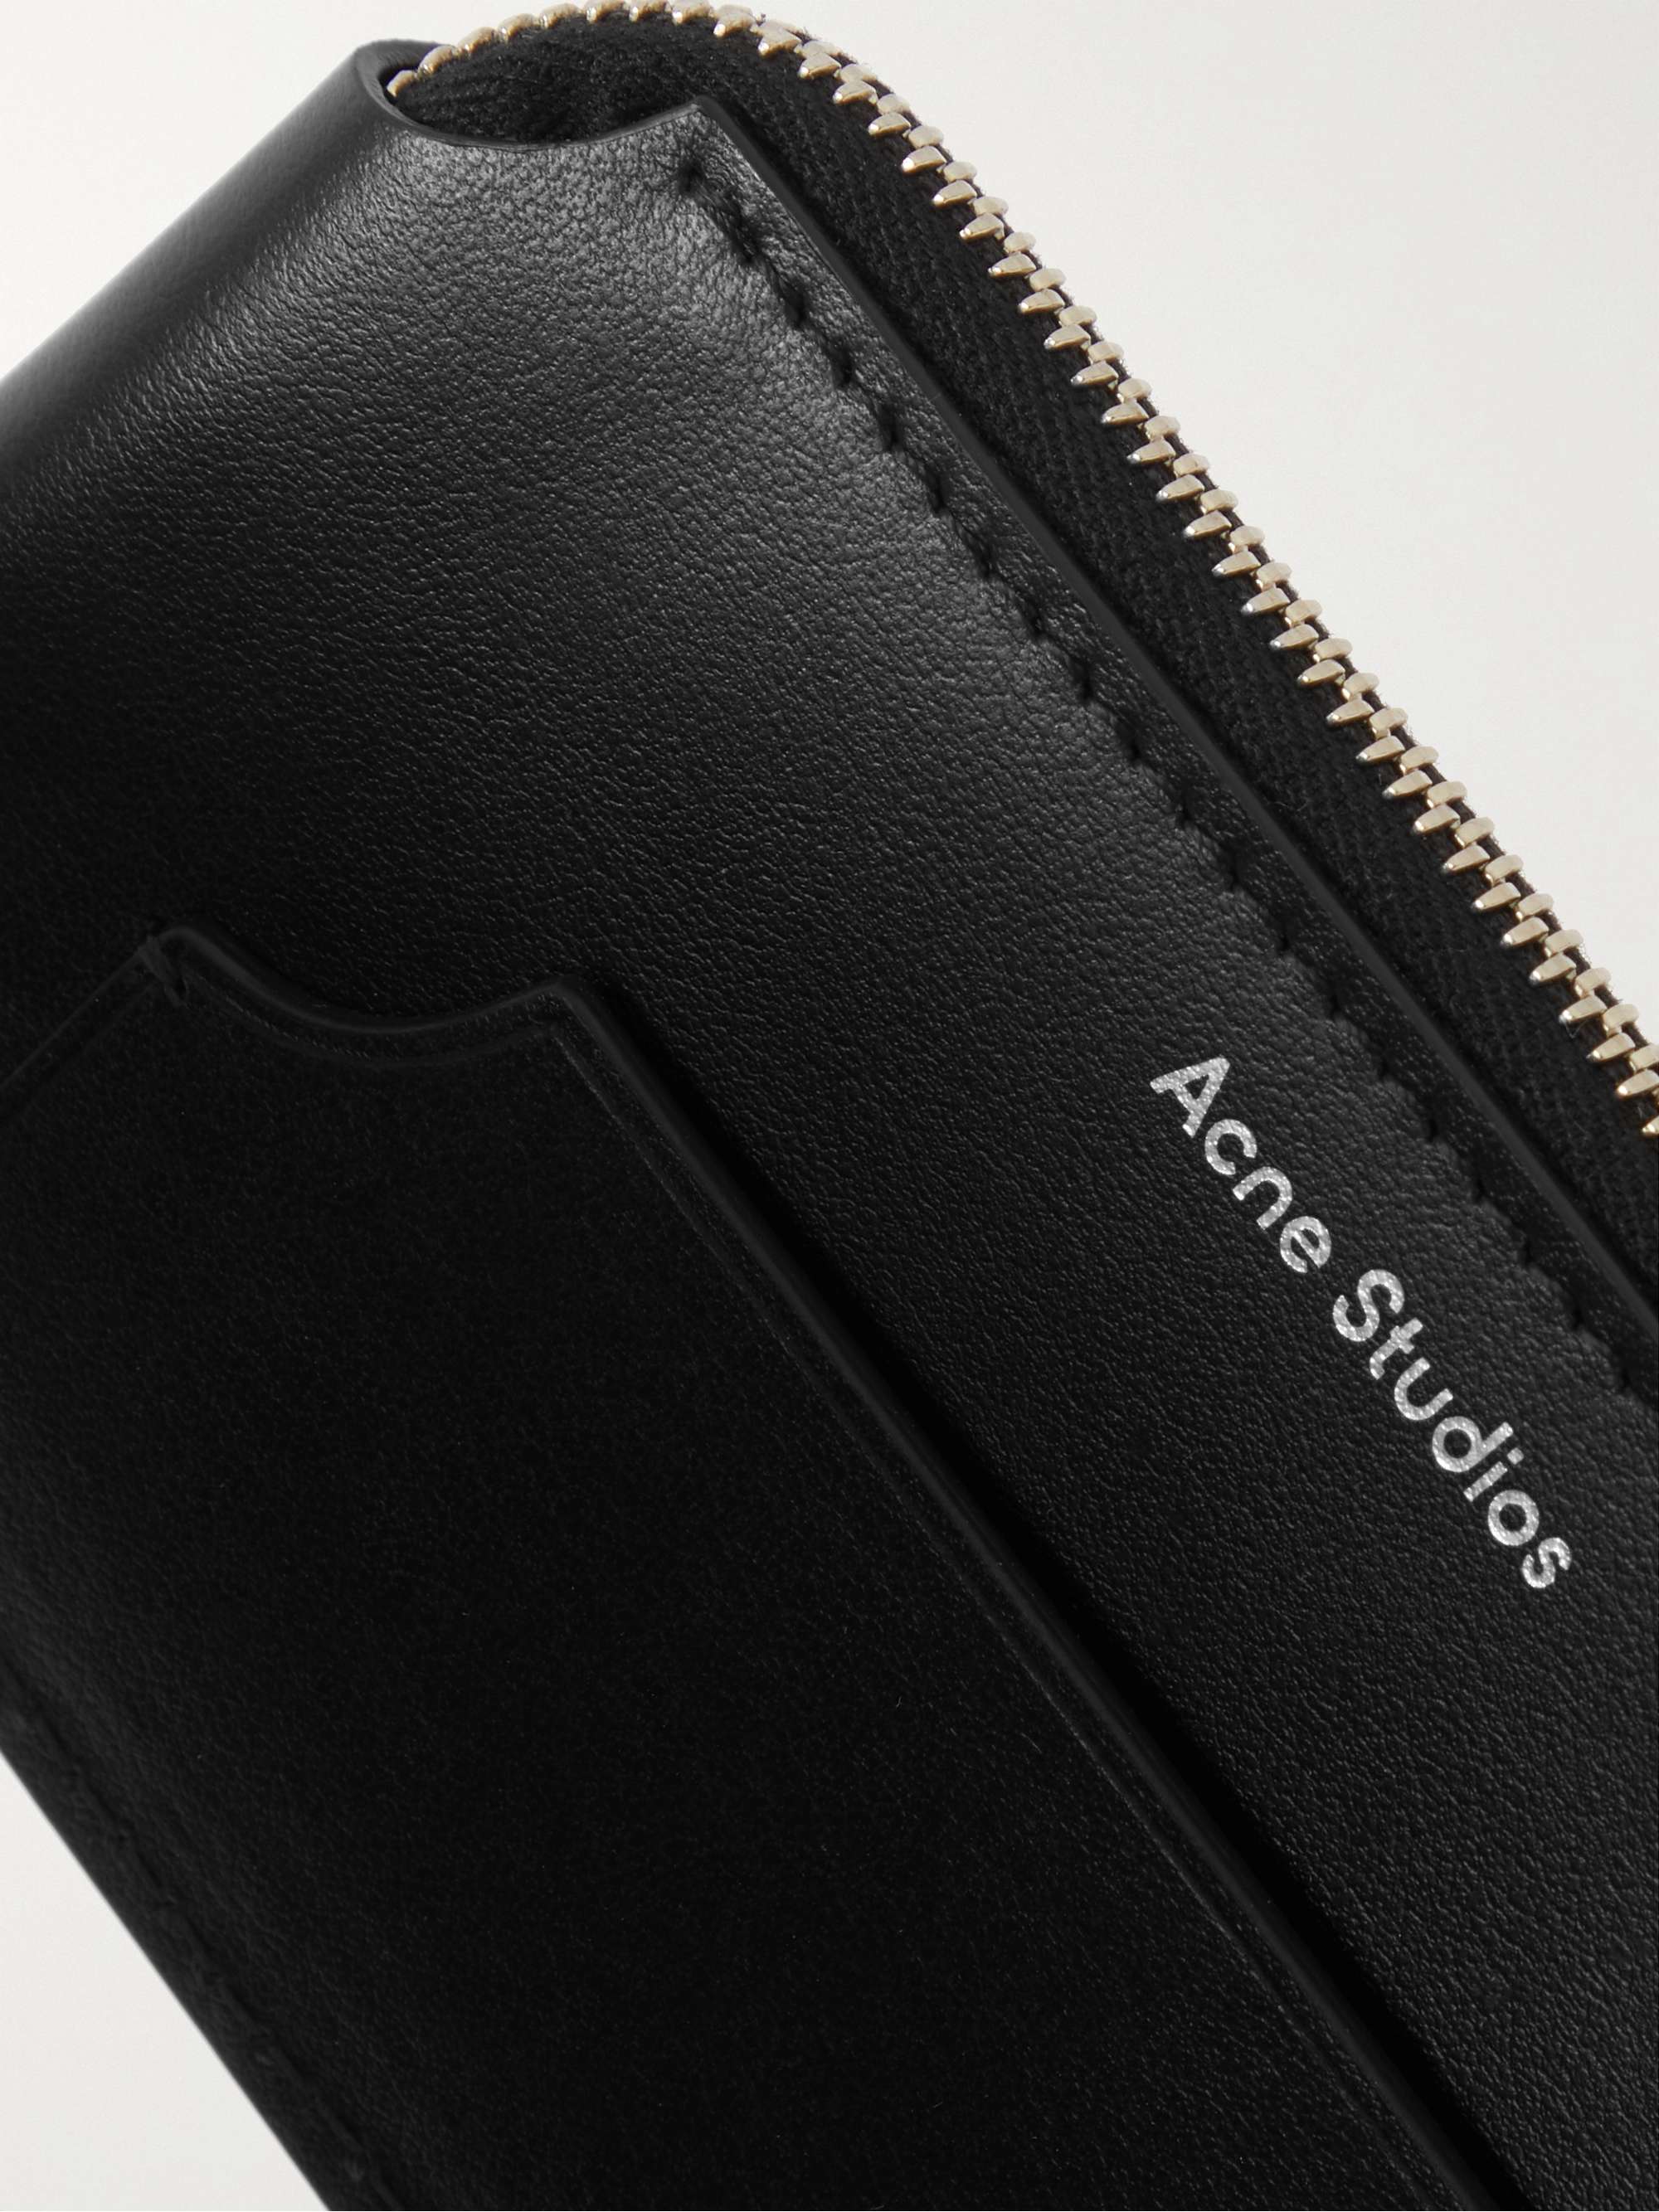 ACNE STUDIOS Leather Zip-Around Wallet